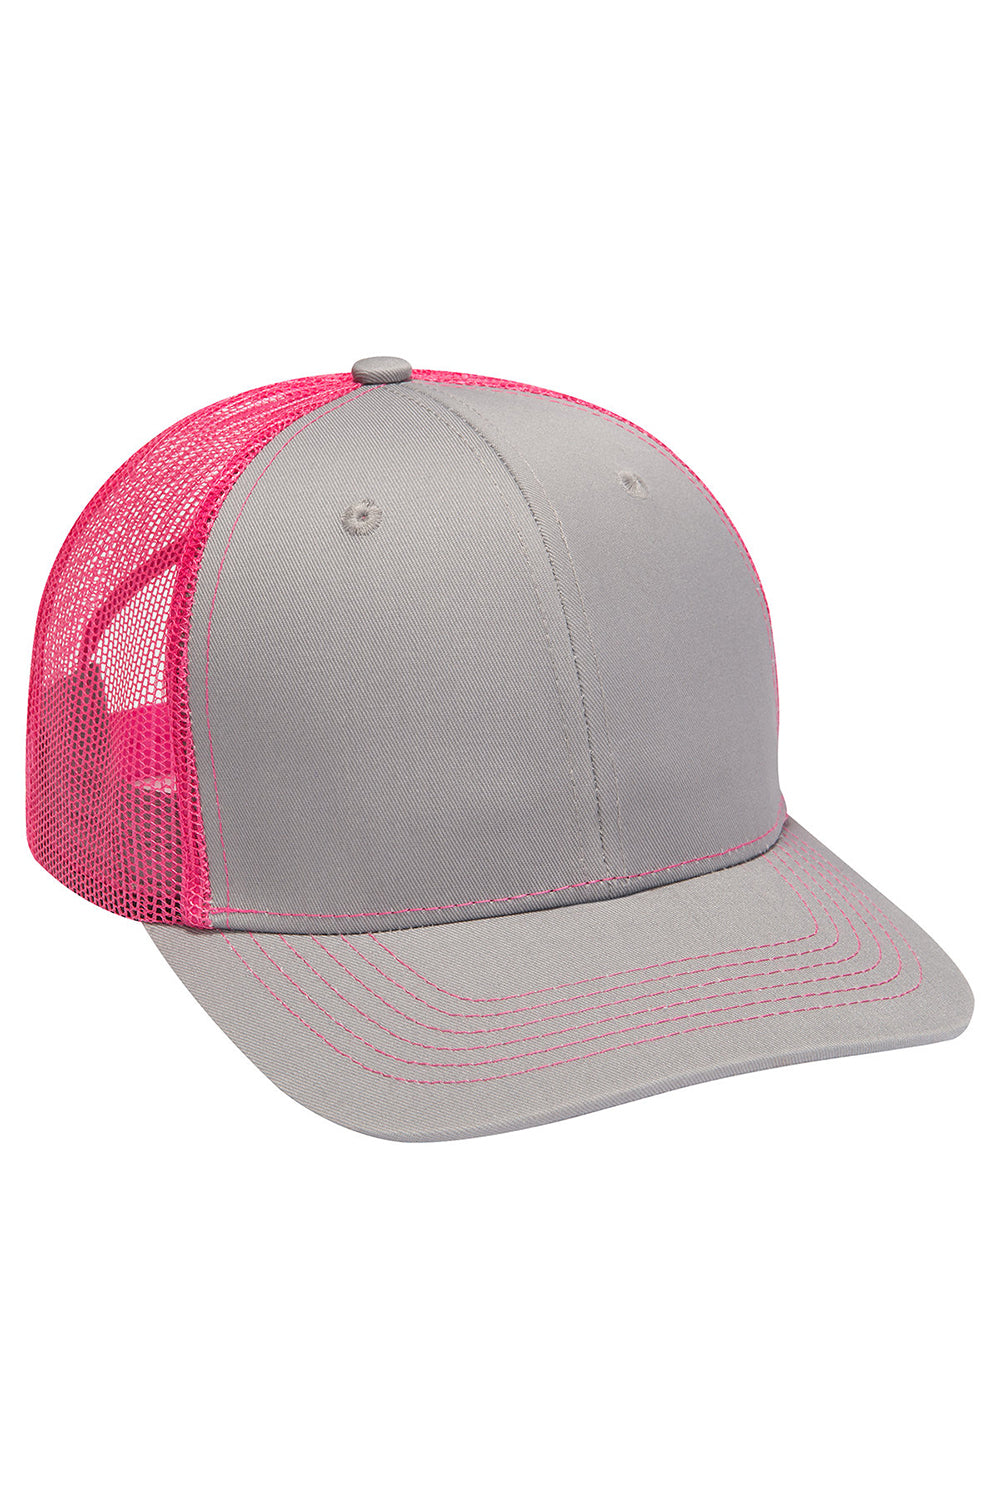 Adams PV112 Mens Eclipse Adjustable Hat Grey/Hot Pink Flat Front